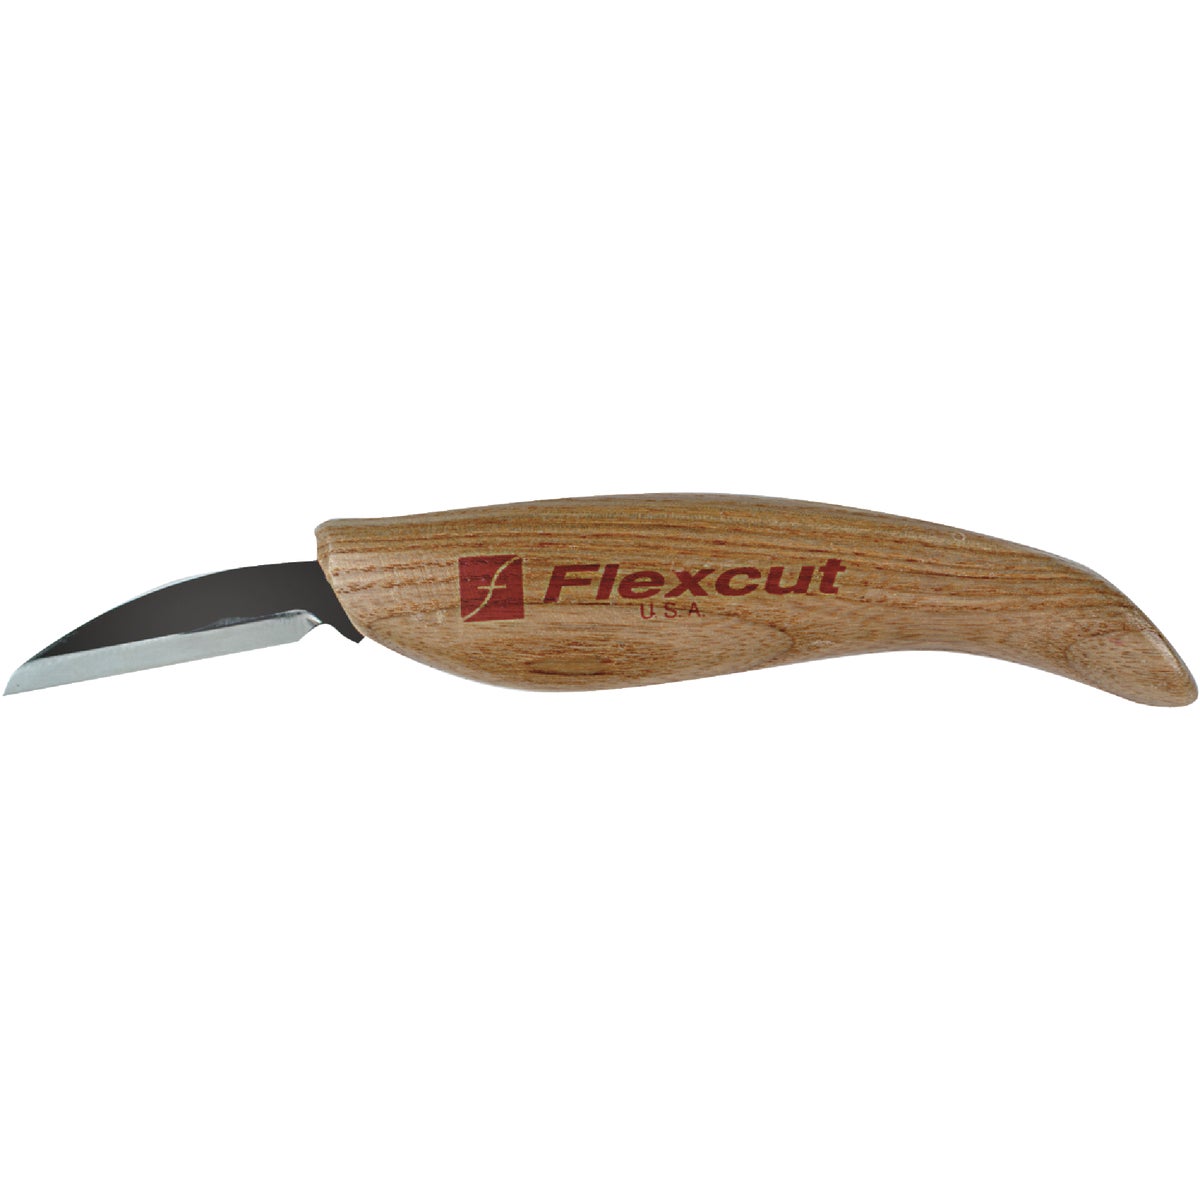 Flex Cut KN14 Flex Cut Rough Carving Knife with 1-3/4 In. Blade KN14